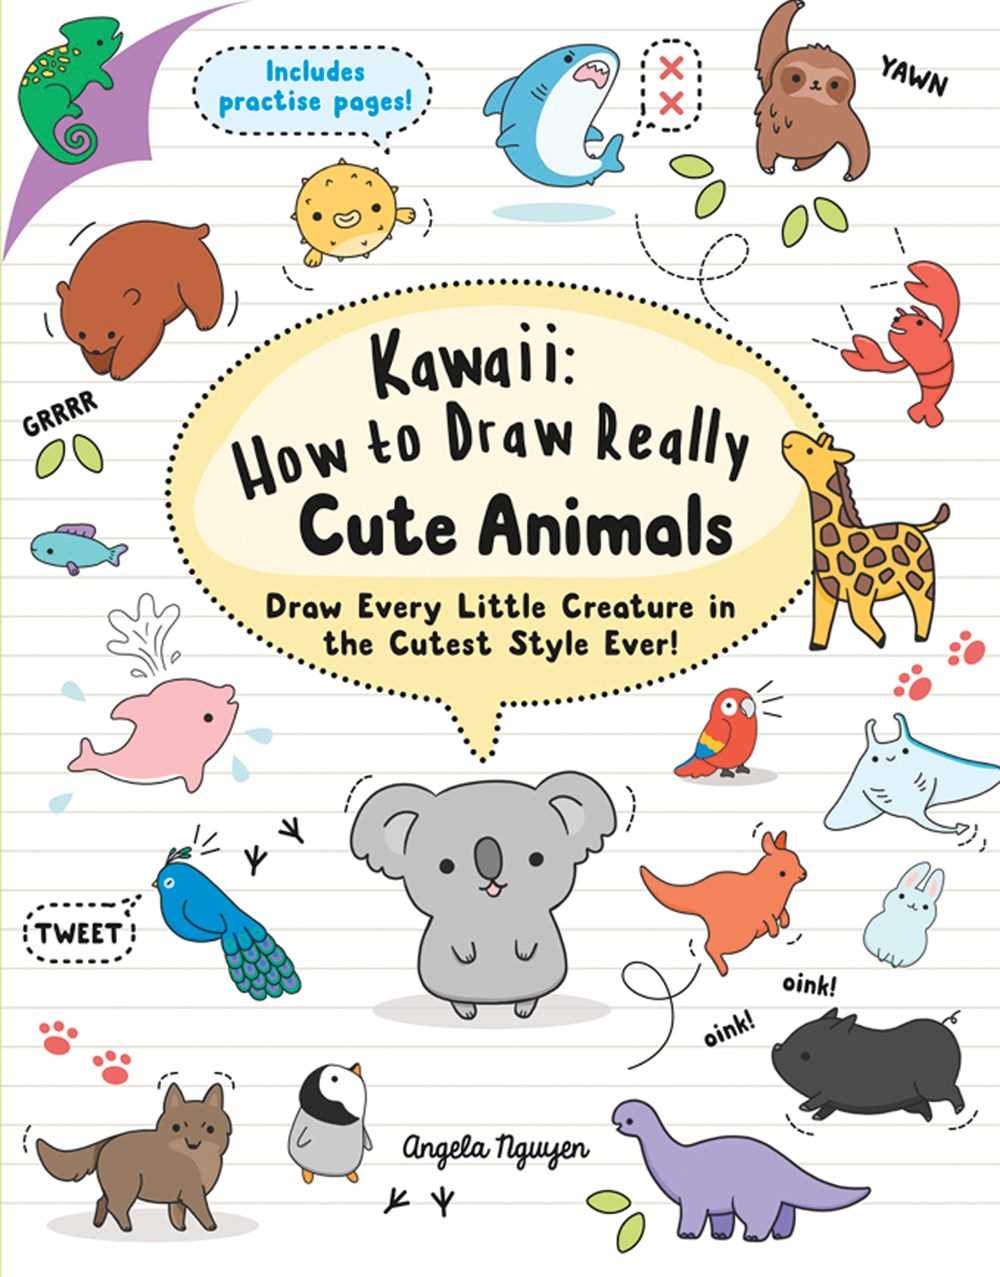 How to Draw Really Cute Animals (Kawaii)